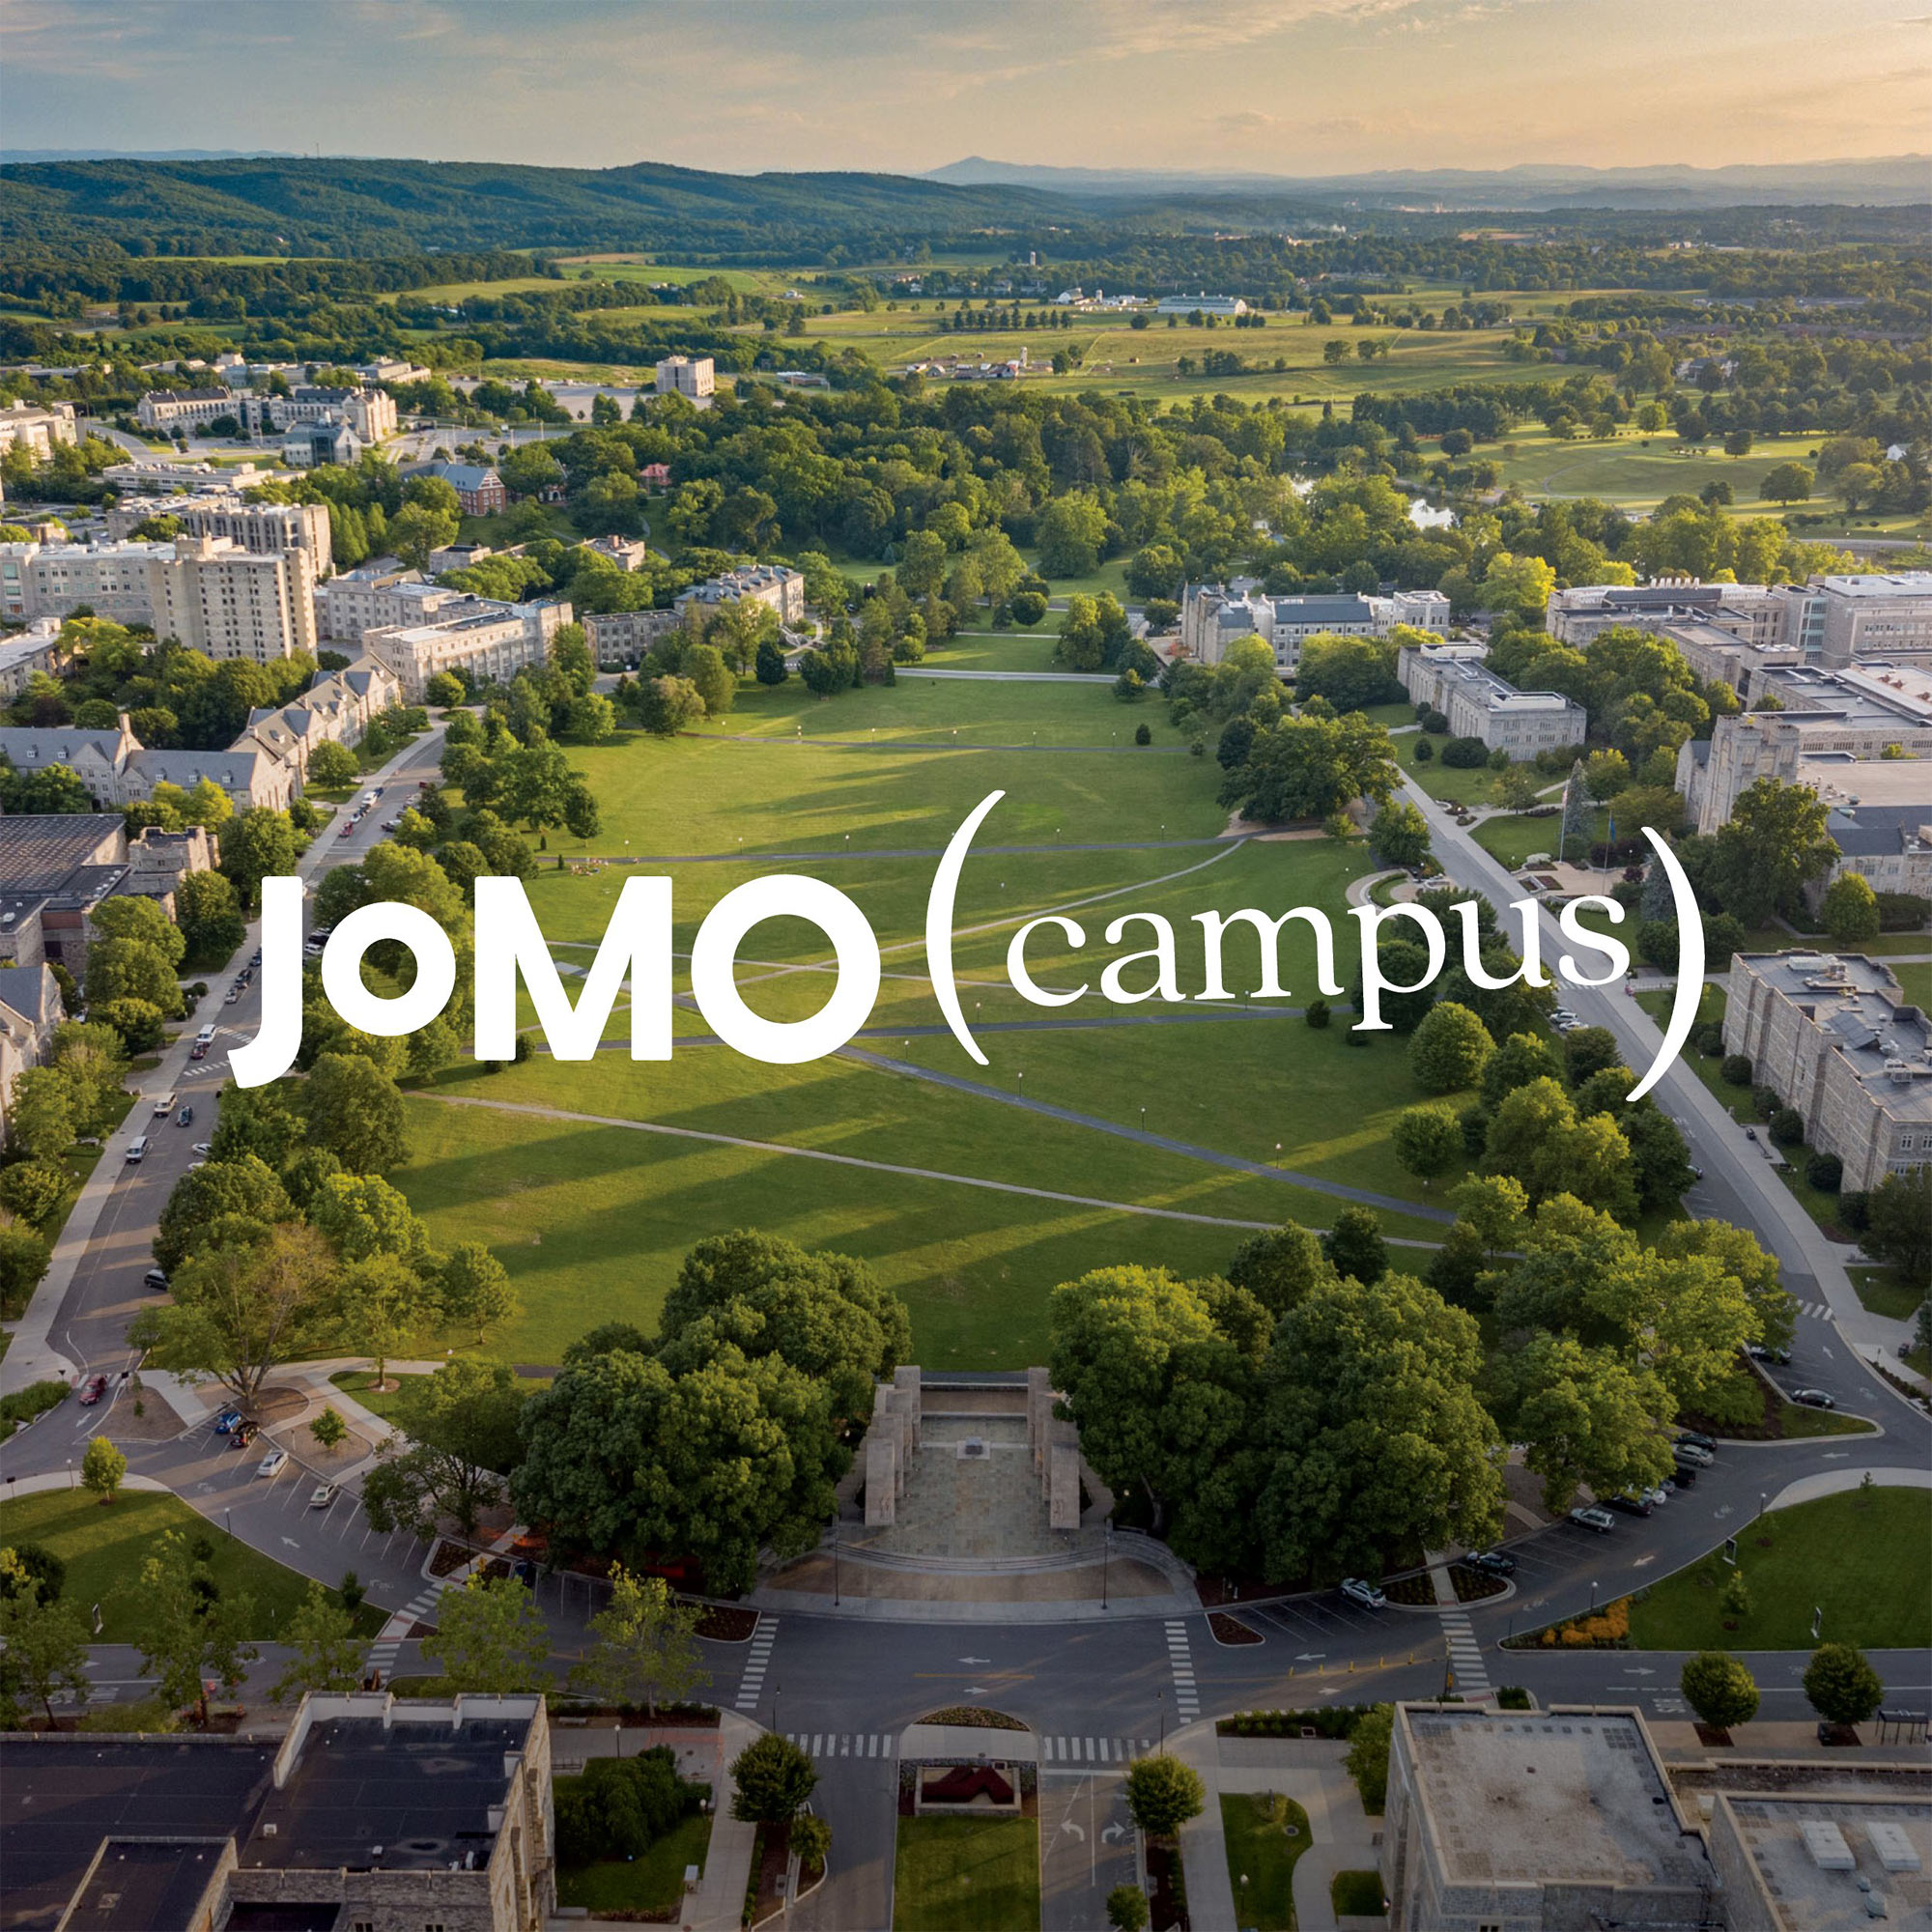 JOMO(campus)